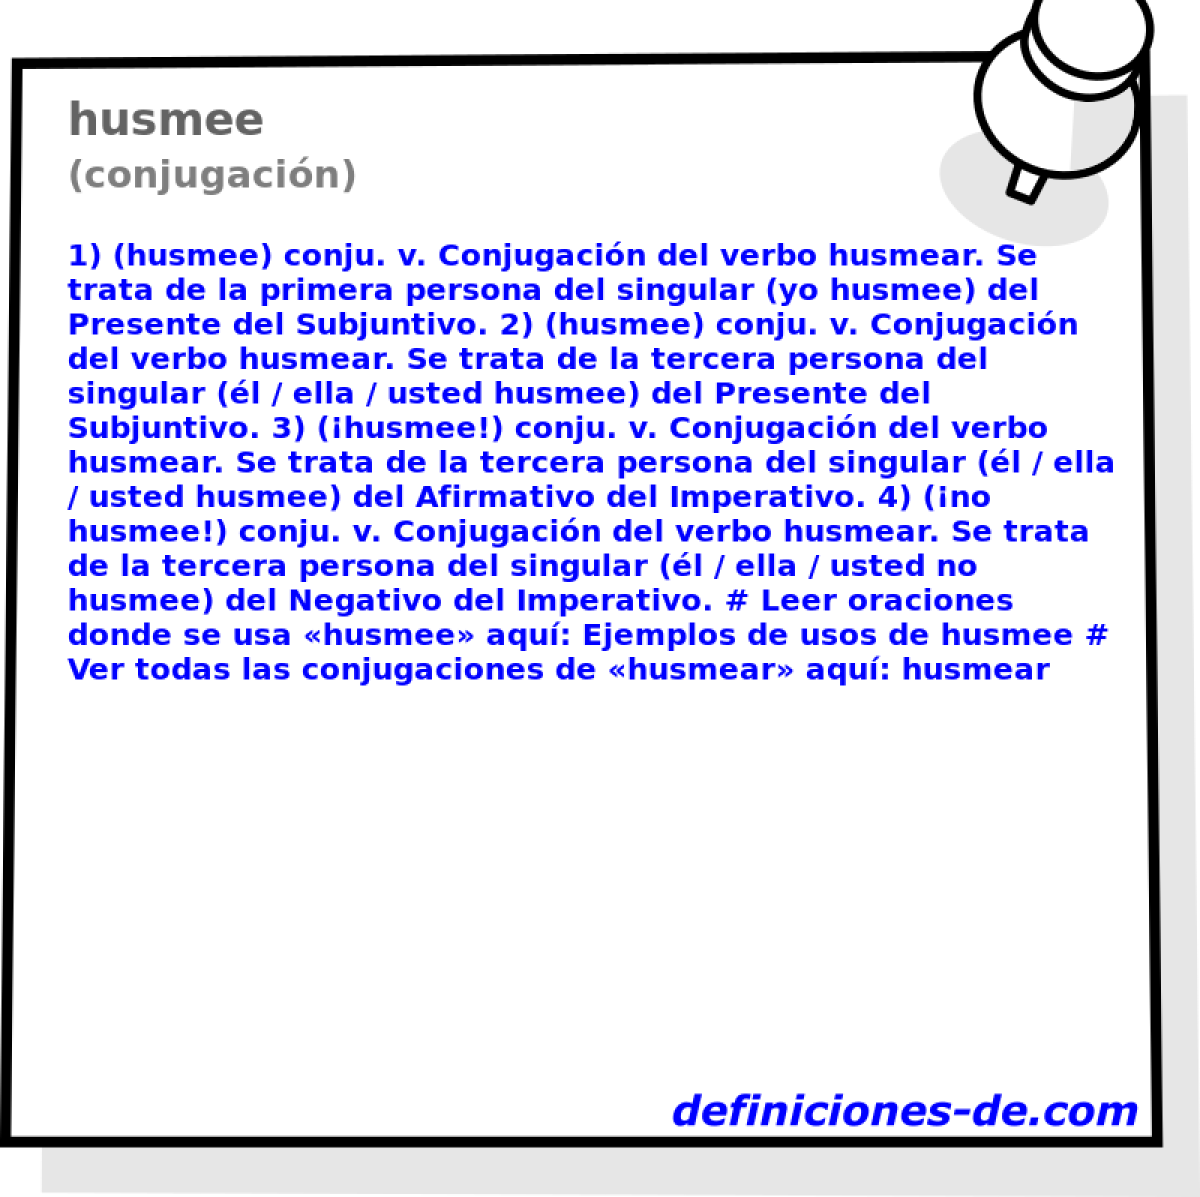 husmee (conjugacin)